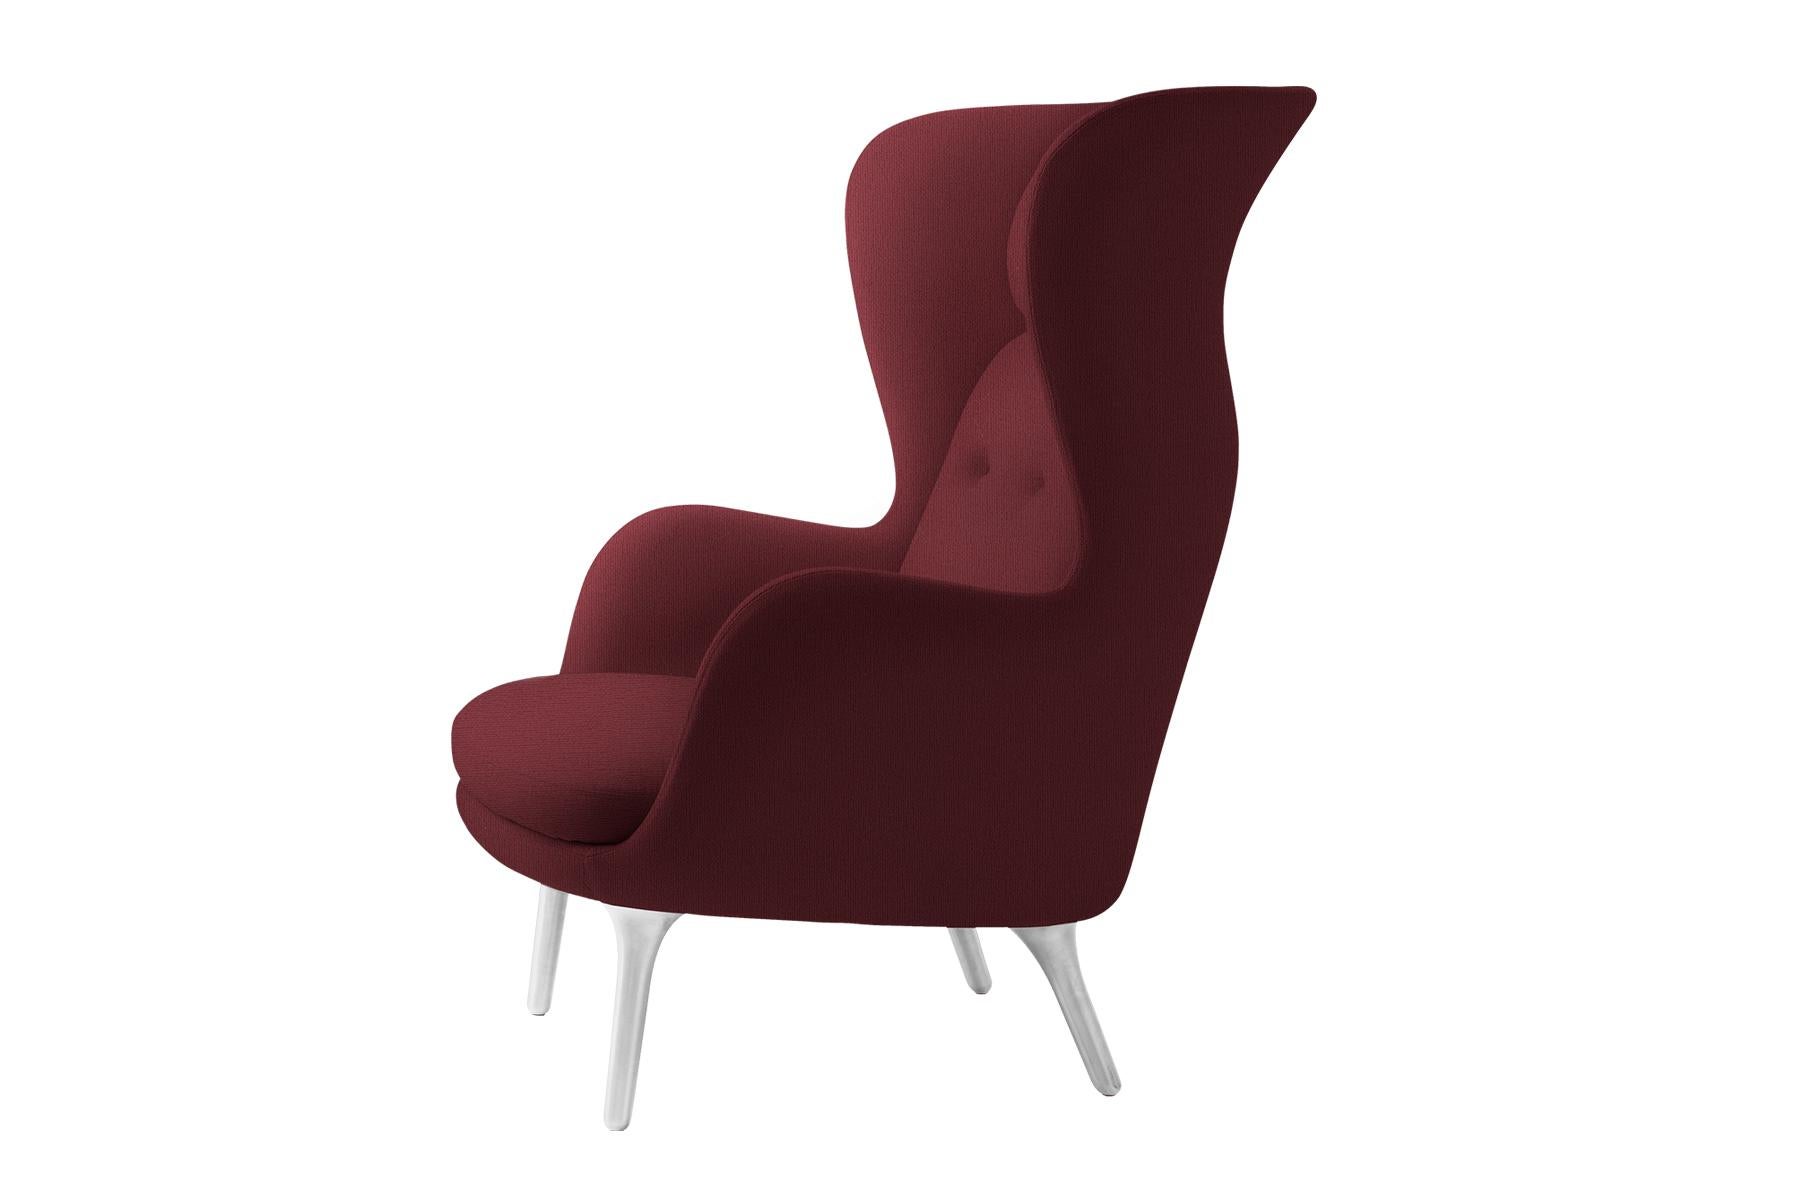 Aluminum Jaime Hayon Model Jh1 Ro Lounge Chair For Sale